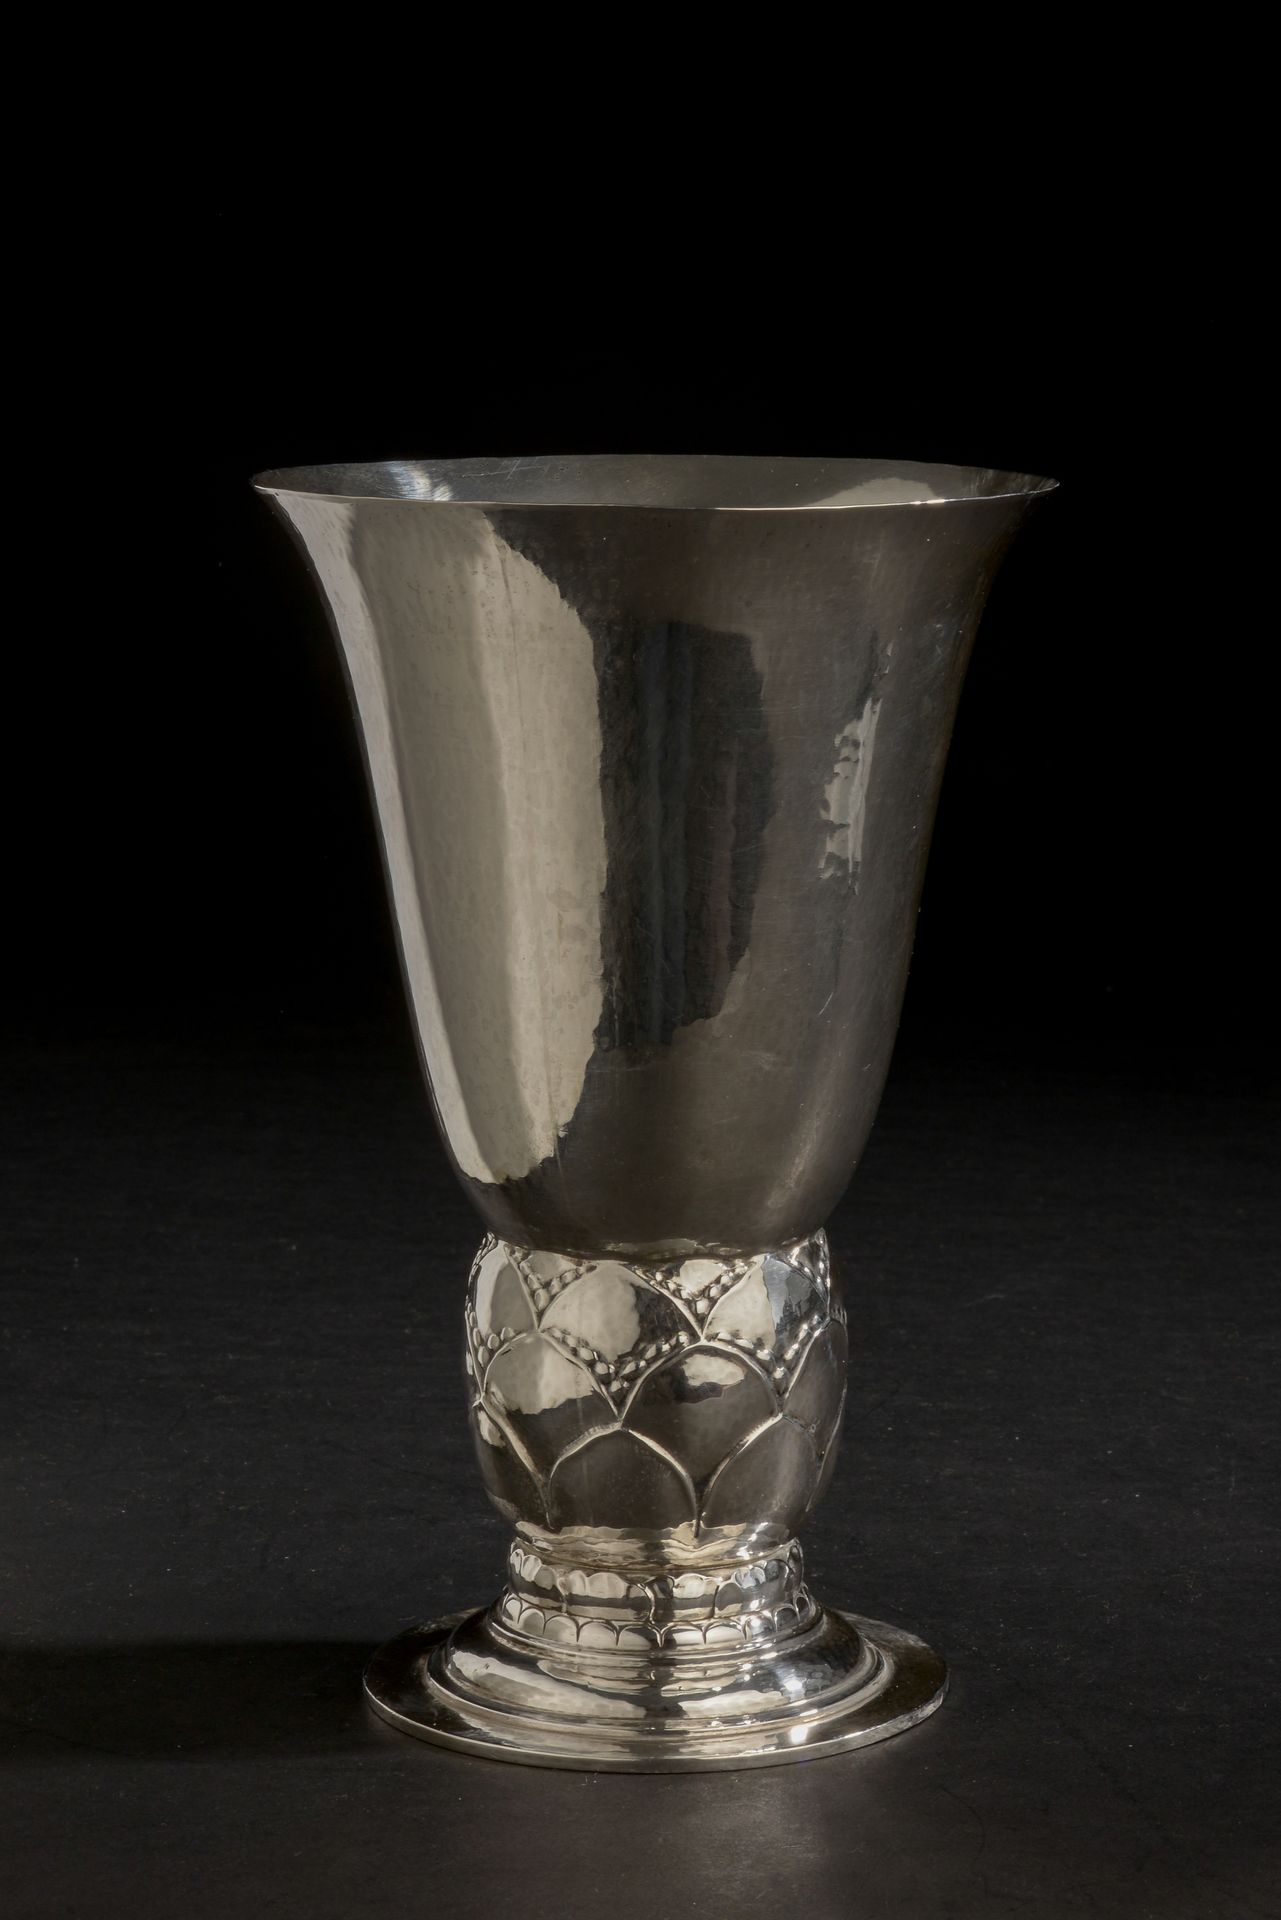 Null Georg JENSEN (Radvad, 1866 - Radvad, 1935).
Silver vase hammered 925 thousa&hellip;